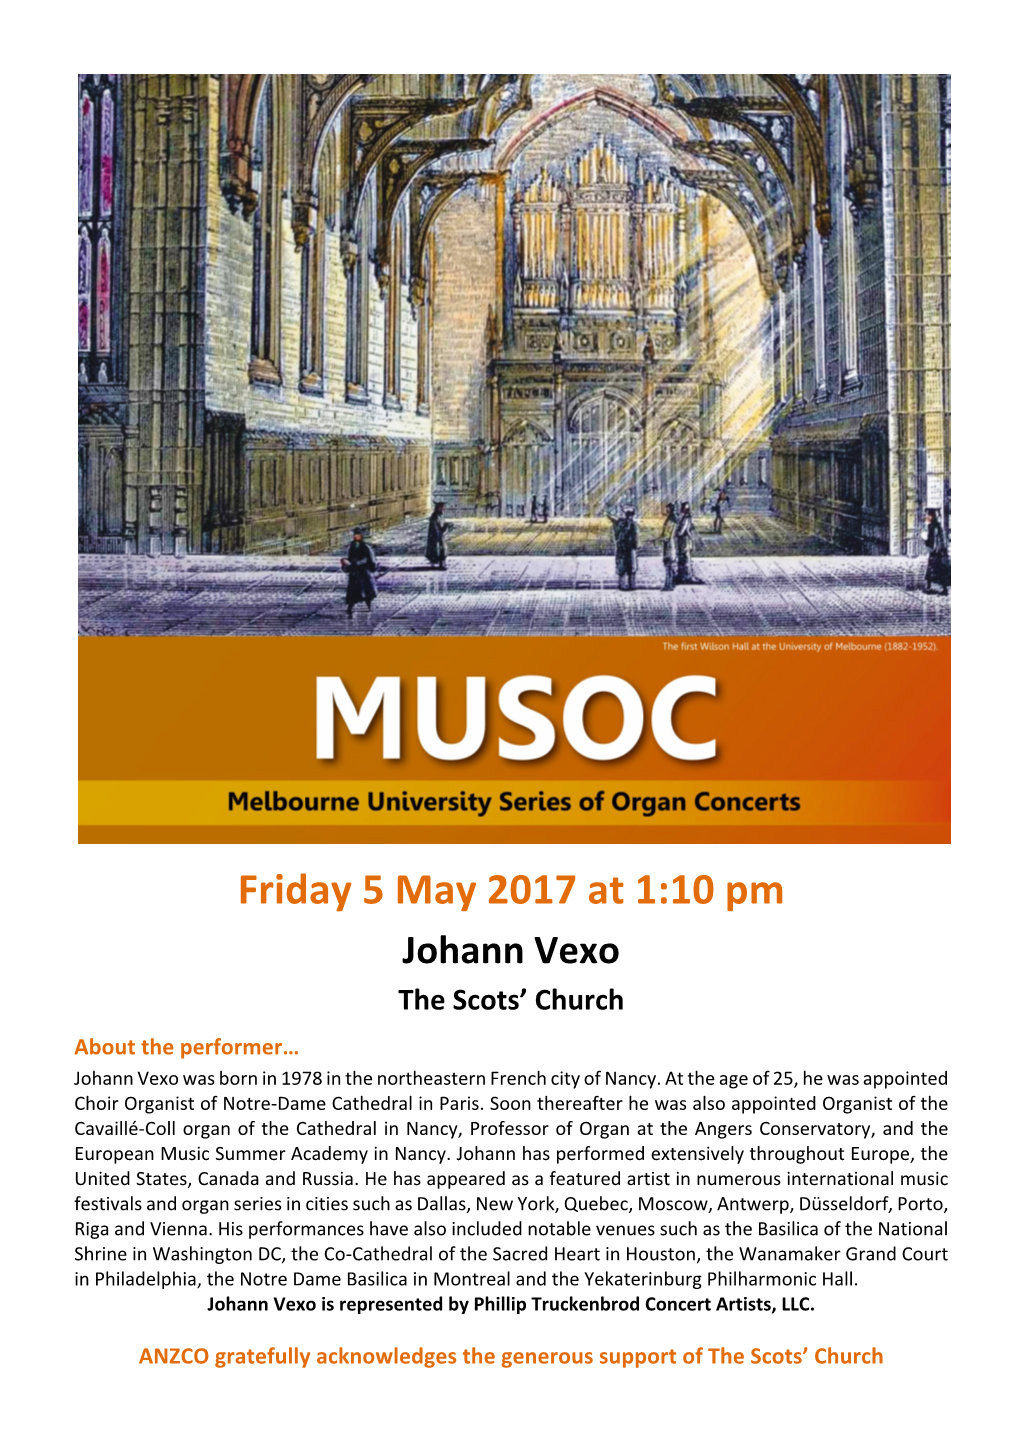 MUSOC the Scots' Church